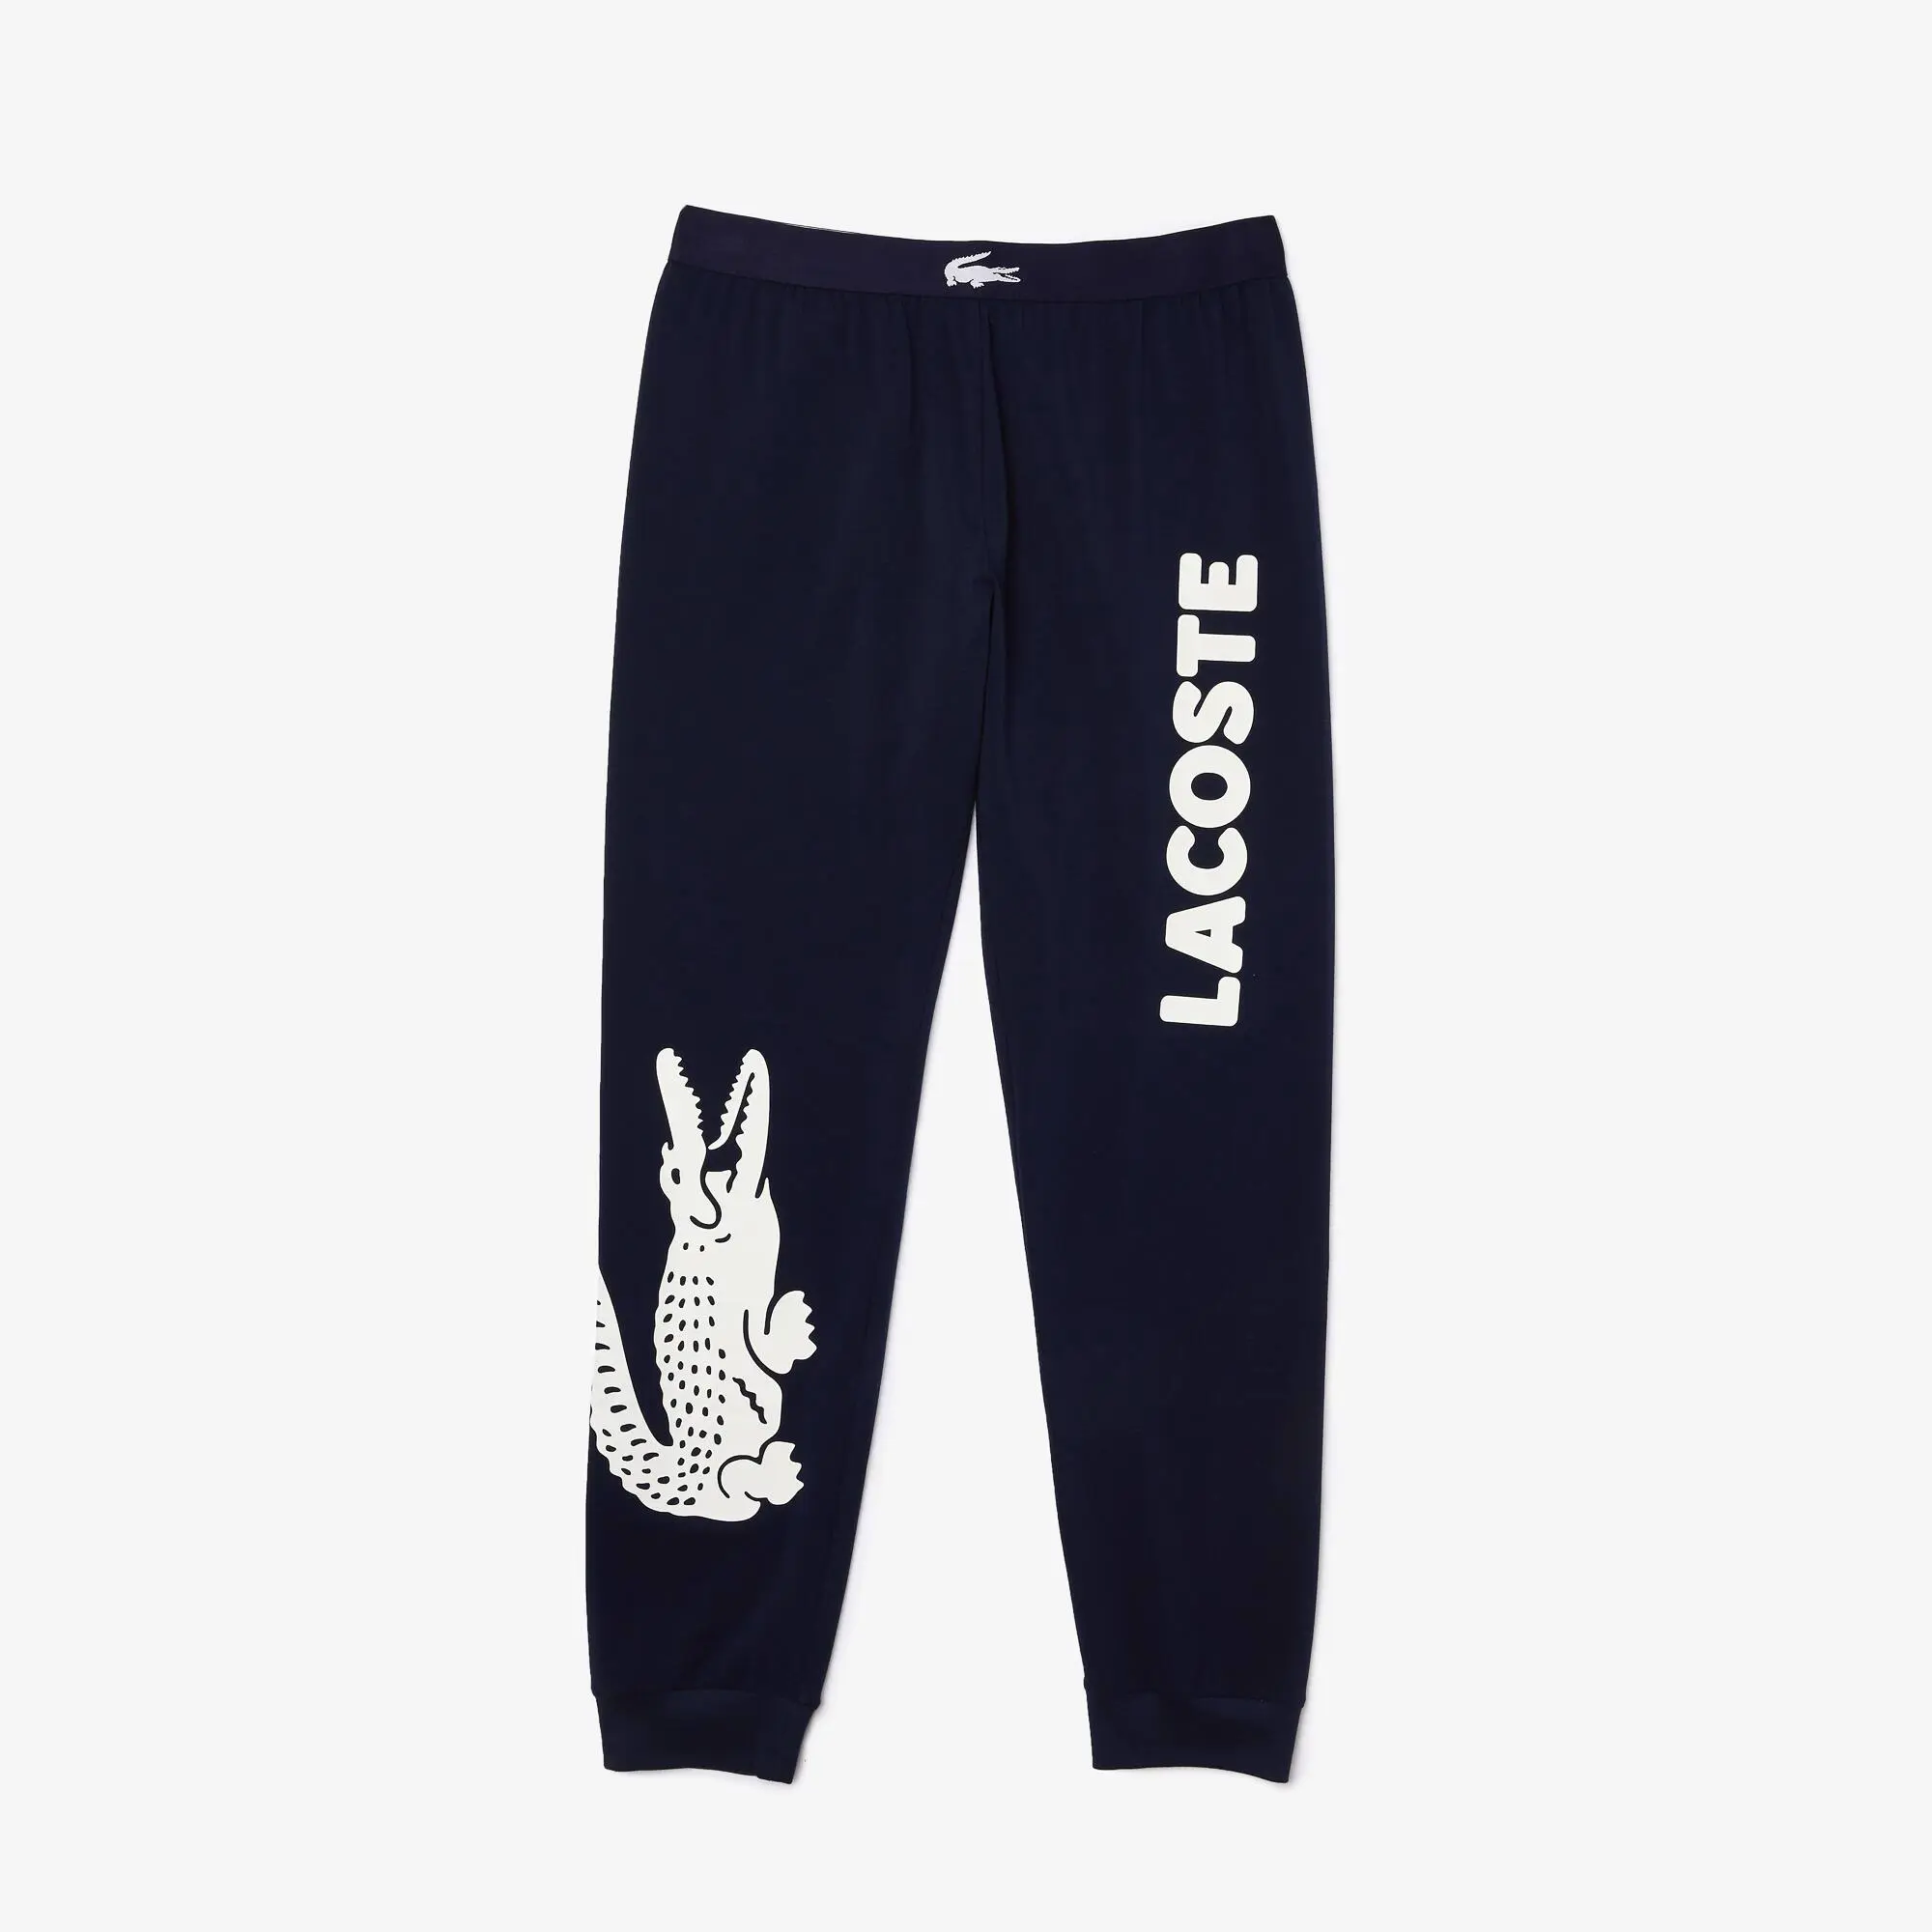 Lacoste Men's Crocodile Print Stretch Cotton Pyjamas Trousers. 2